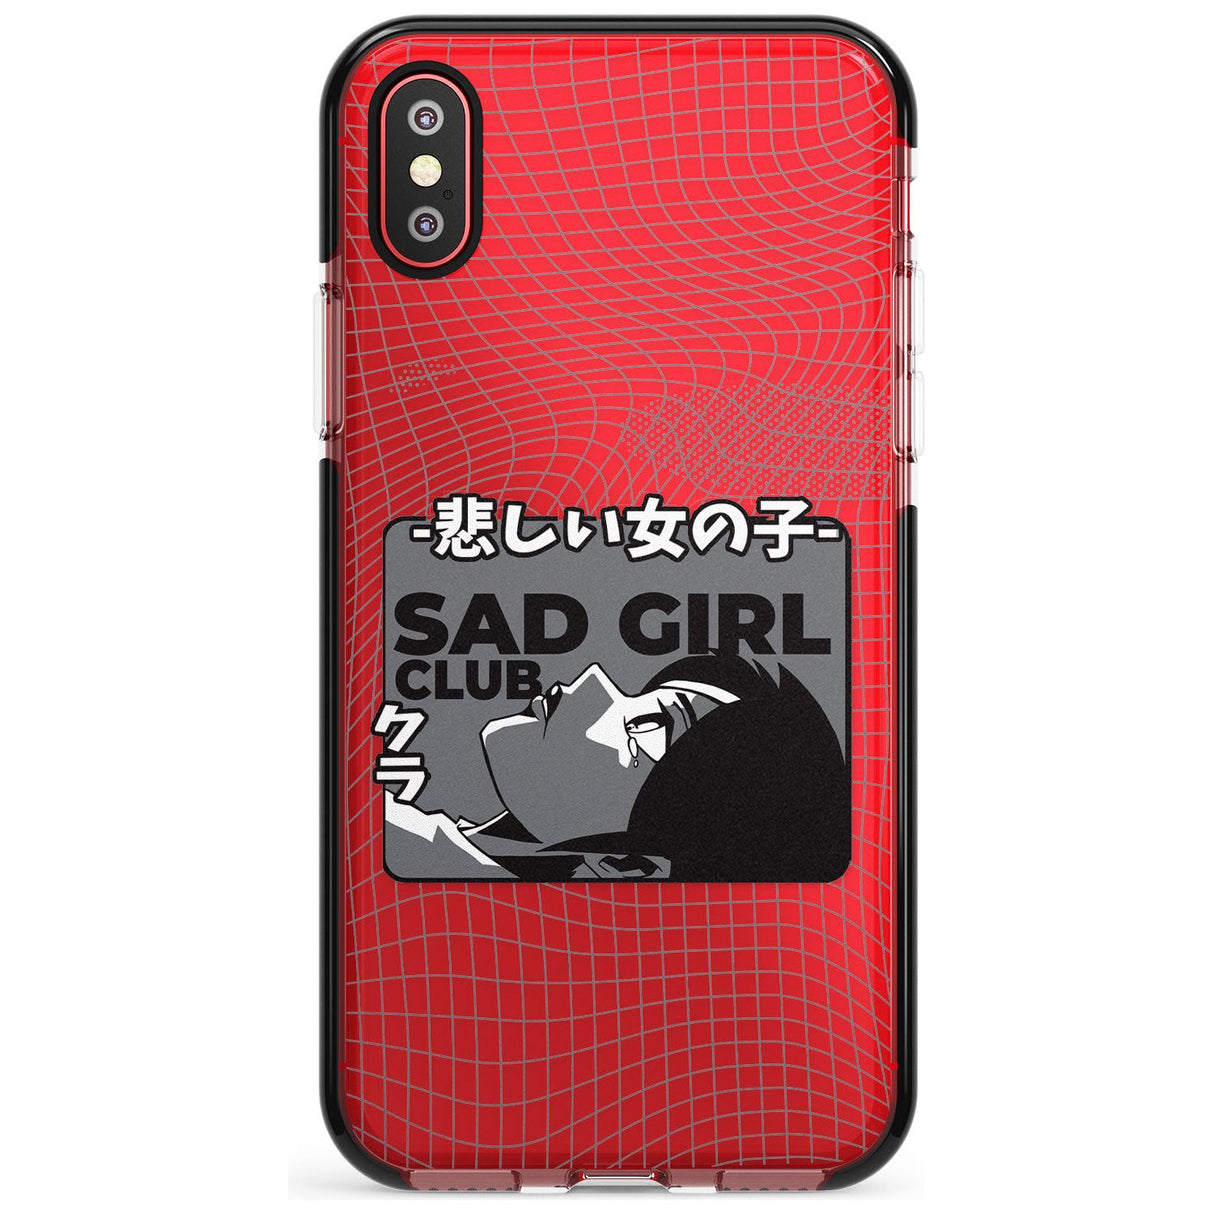 Sad Girl Club Black Impact Phone Case for iPhone X XS Max XR